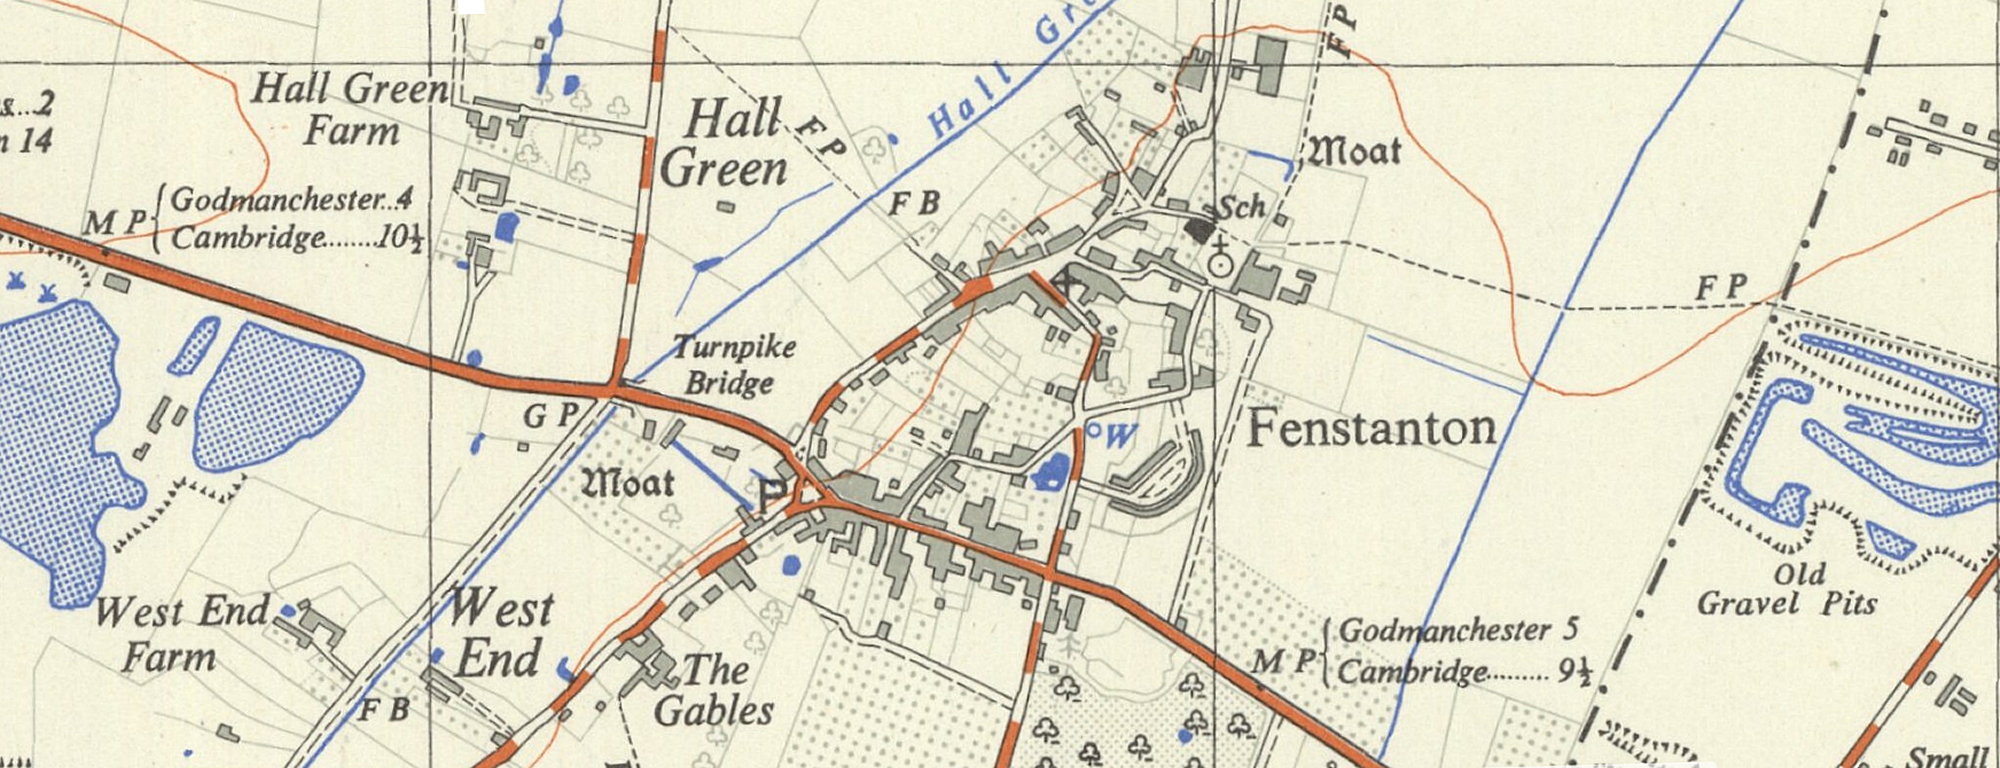 Fenstanton Map 1955